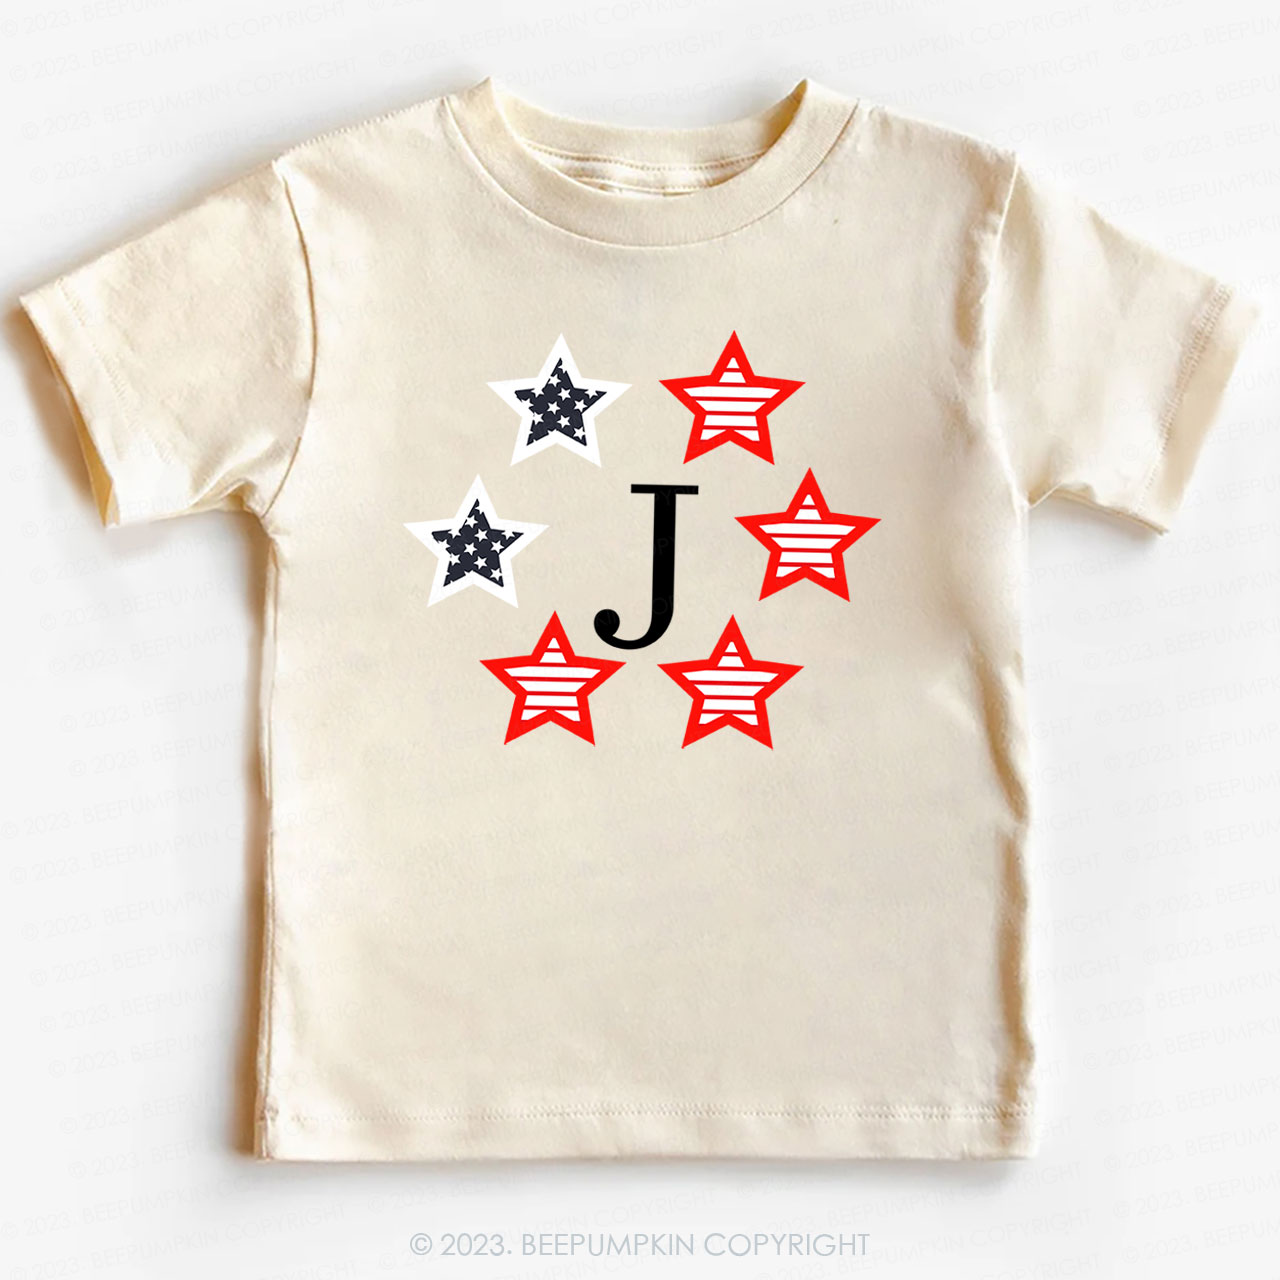 Monogrammed Embroidered Stars Shirt For Kids